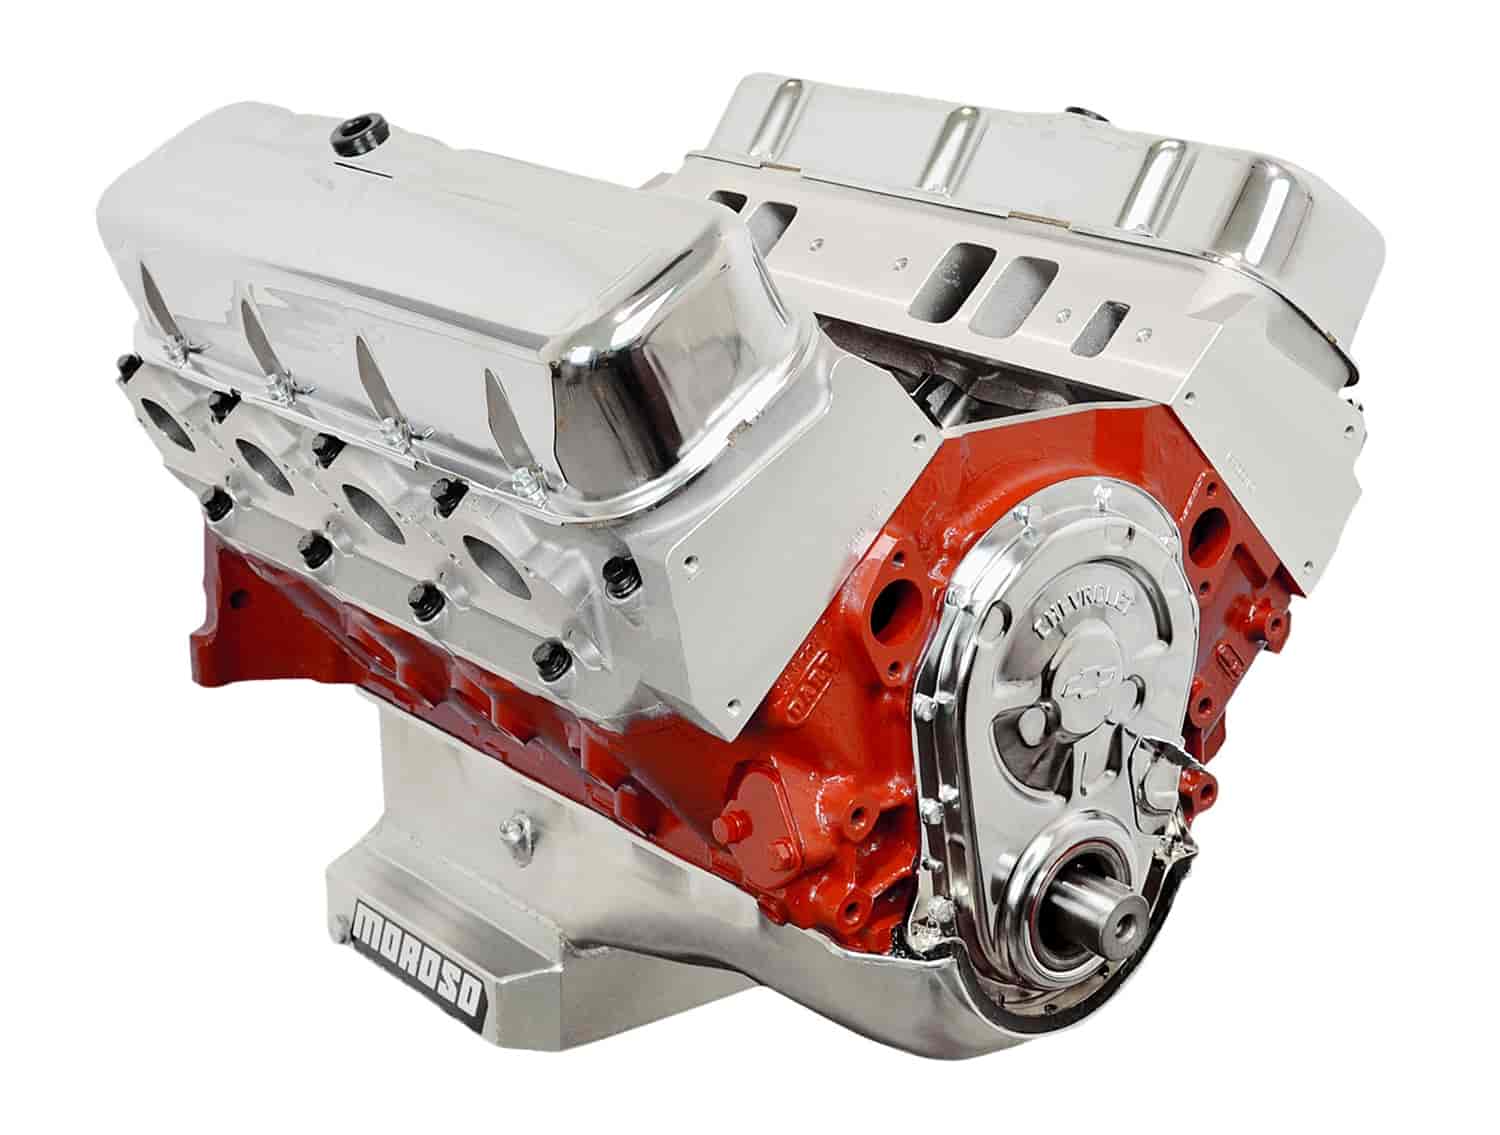 High Performance Crate Engine Big Block Chevy 496ci / 600HP / 605TQ